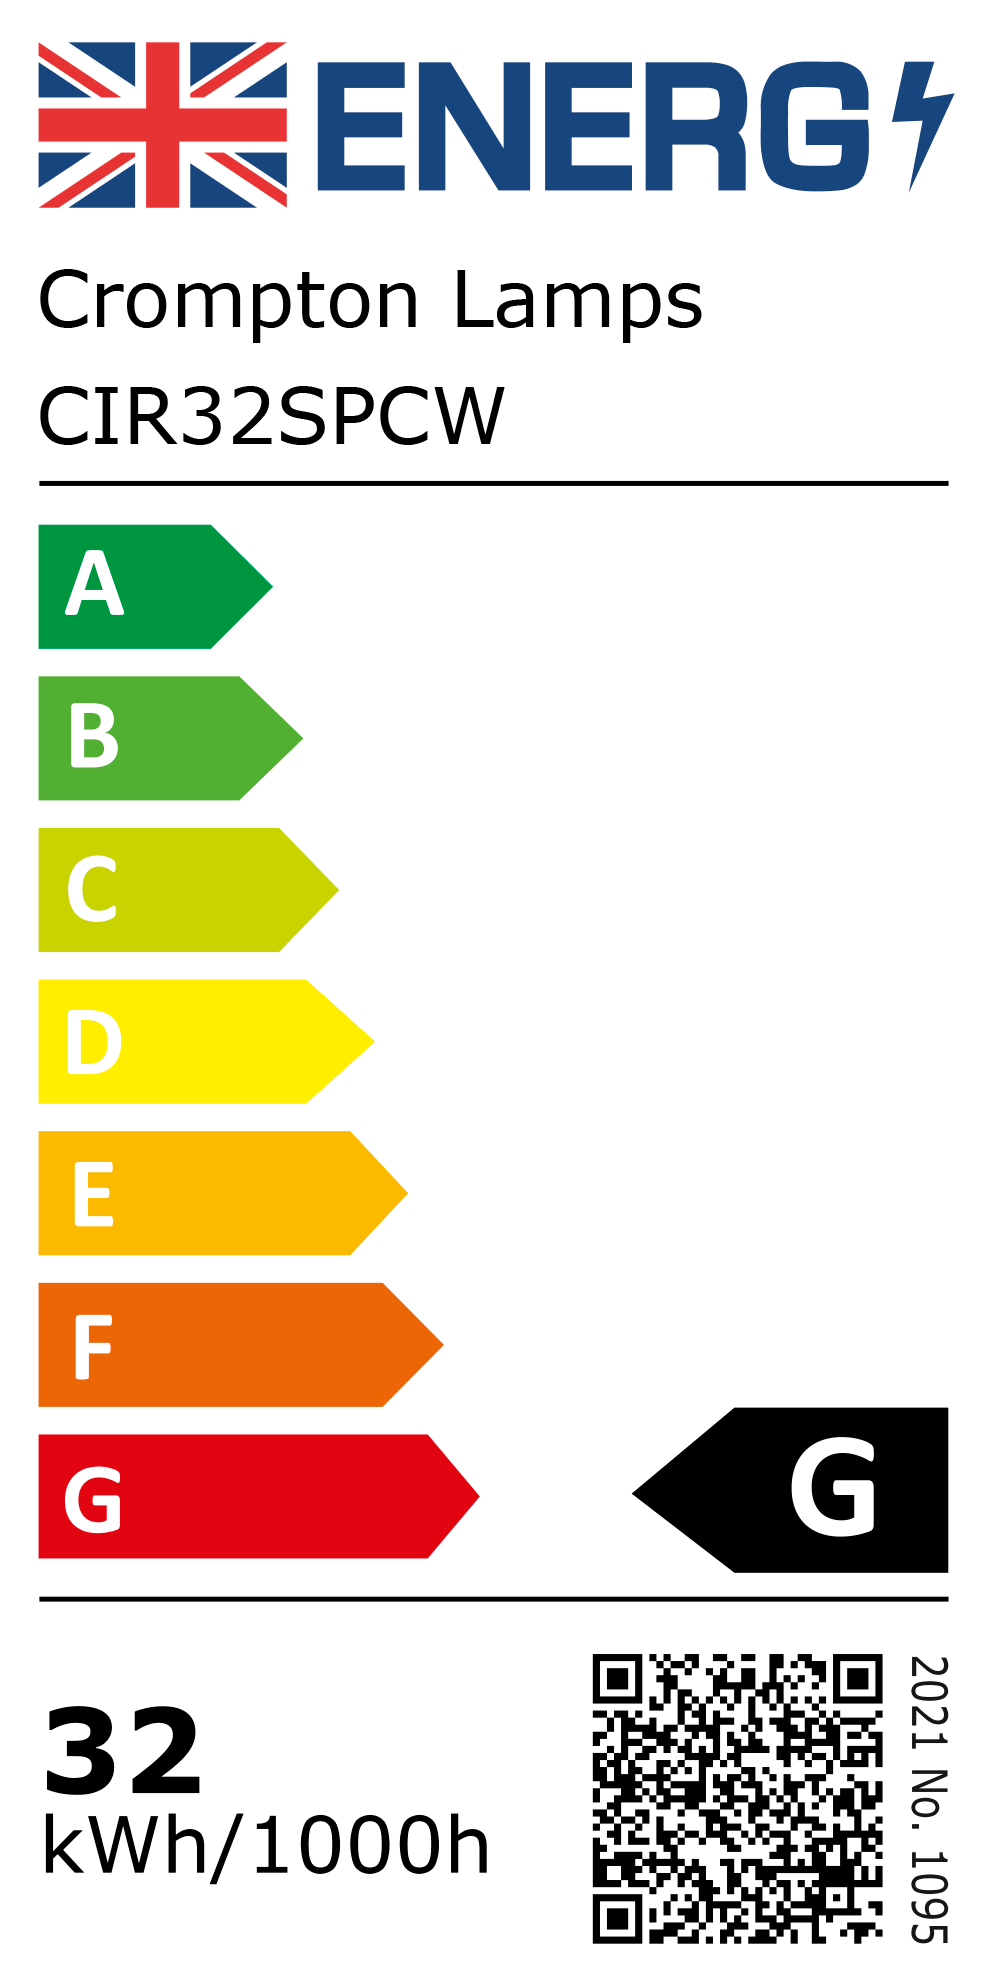 New 2021 Energy Rating Label: Stock Code CIR32SPCW